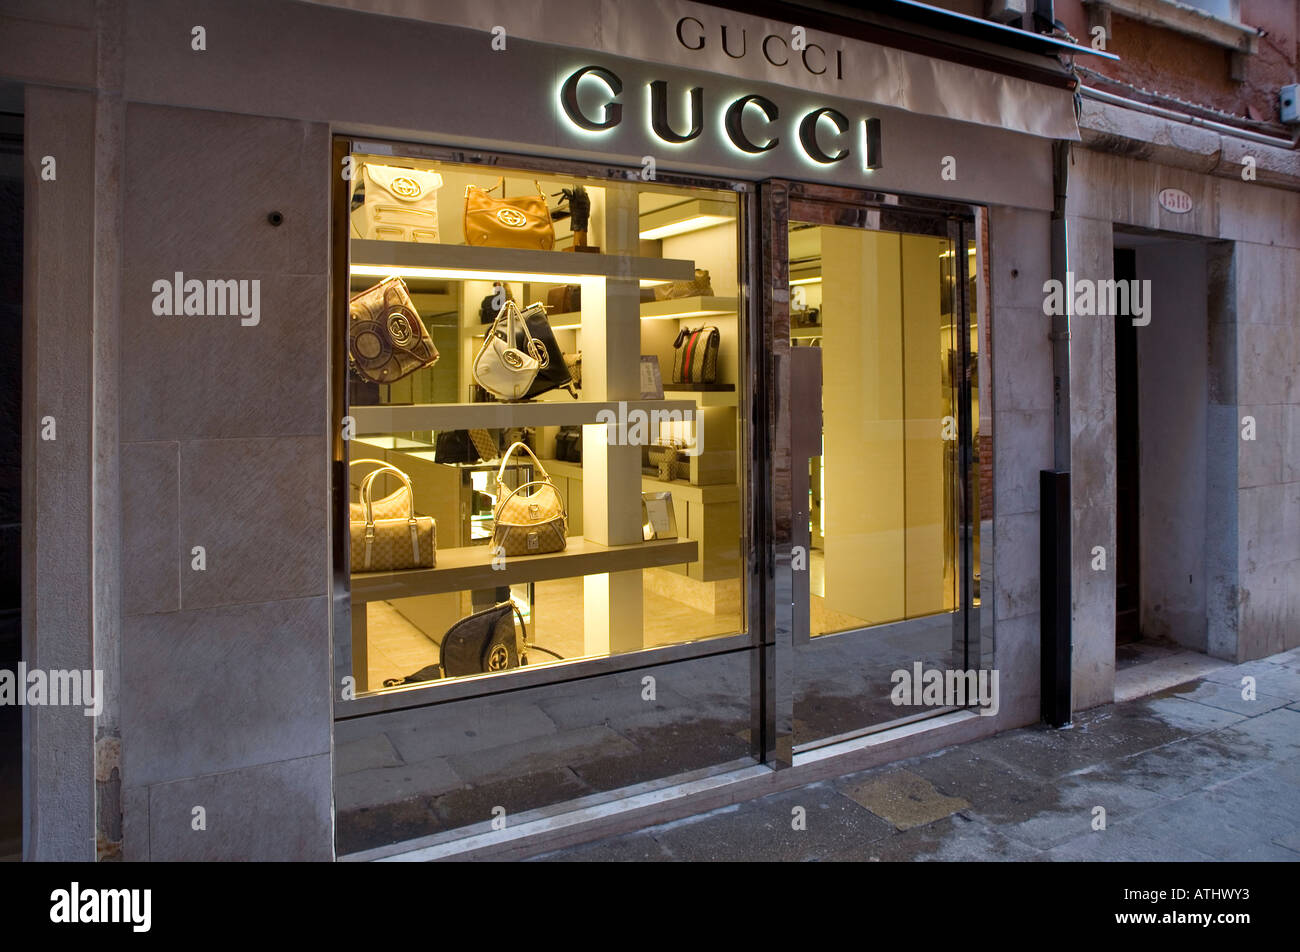 Gucci-Shop Italien - Alamy